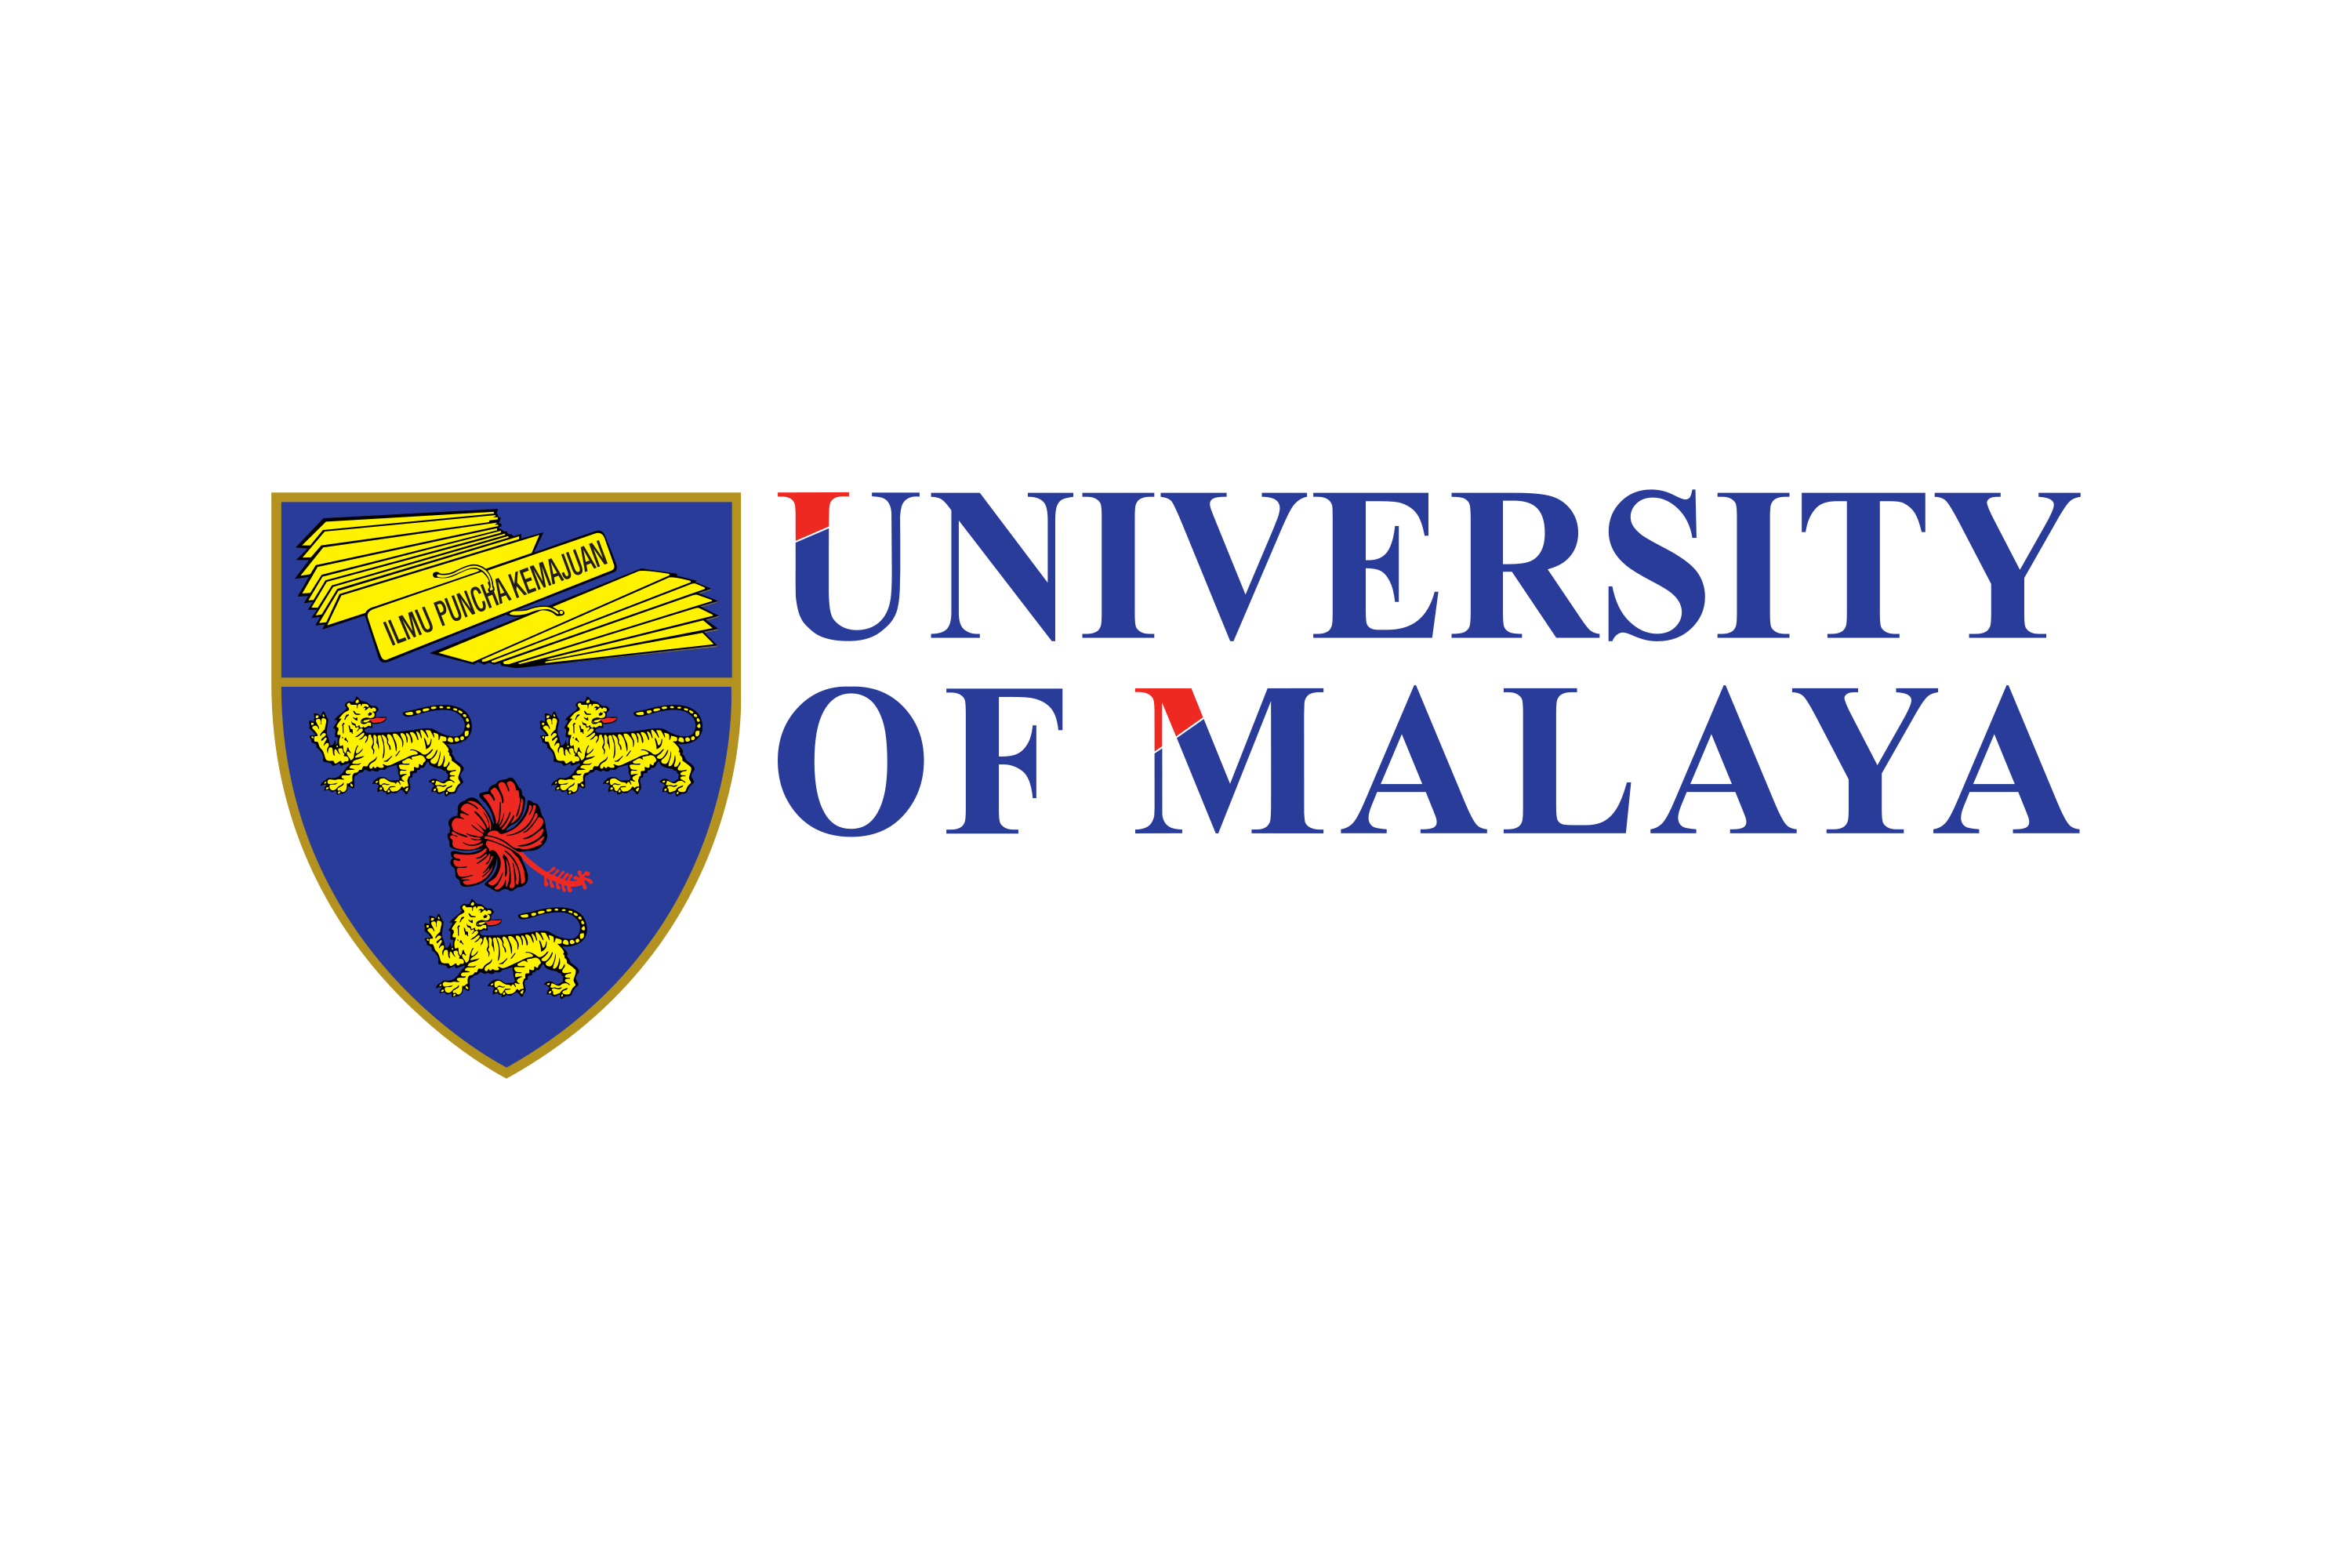 Download University of Malaya (UM, Universiti Malaya) Logo in SVG Vector or  PNG File Format - Logo.wine